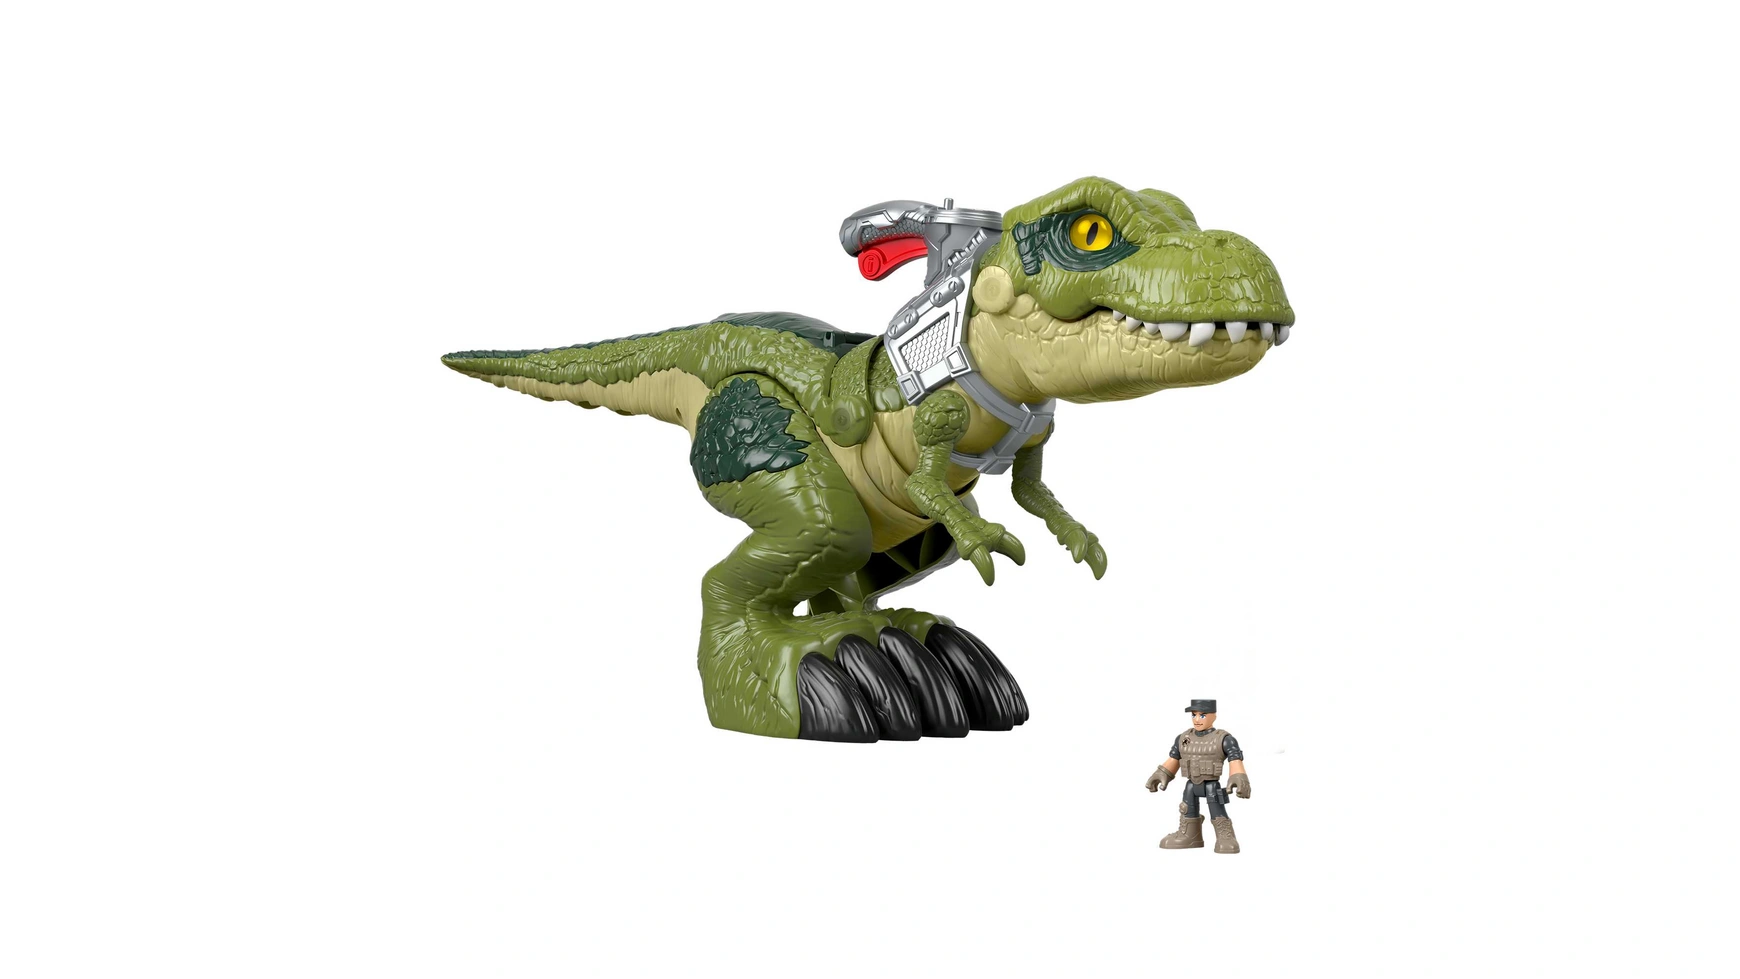 Игрушка-динозавр Fisher-Price Imaginext Jurassic World Hungry T-Rex цветной мир природа и дети звуки ароматы краски 5 2011